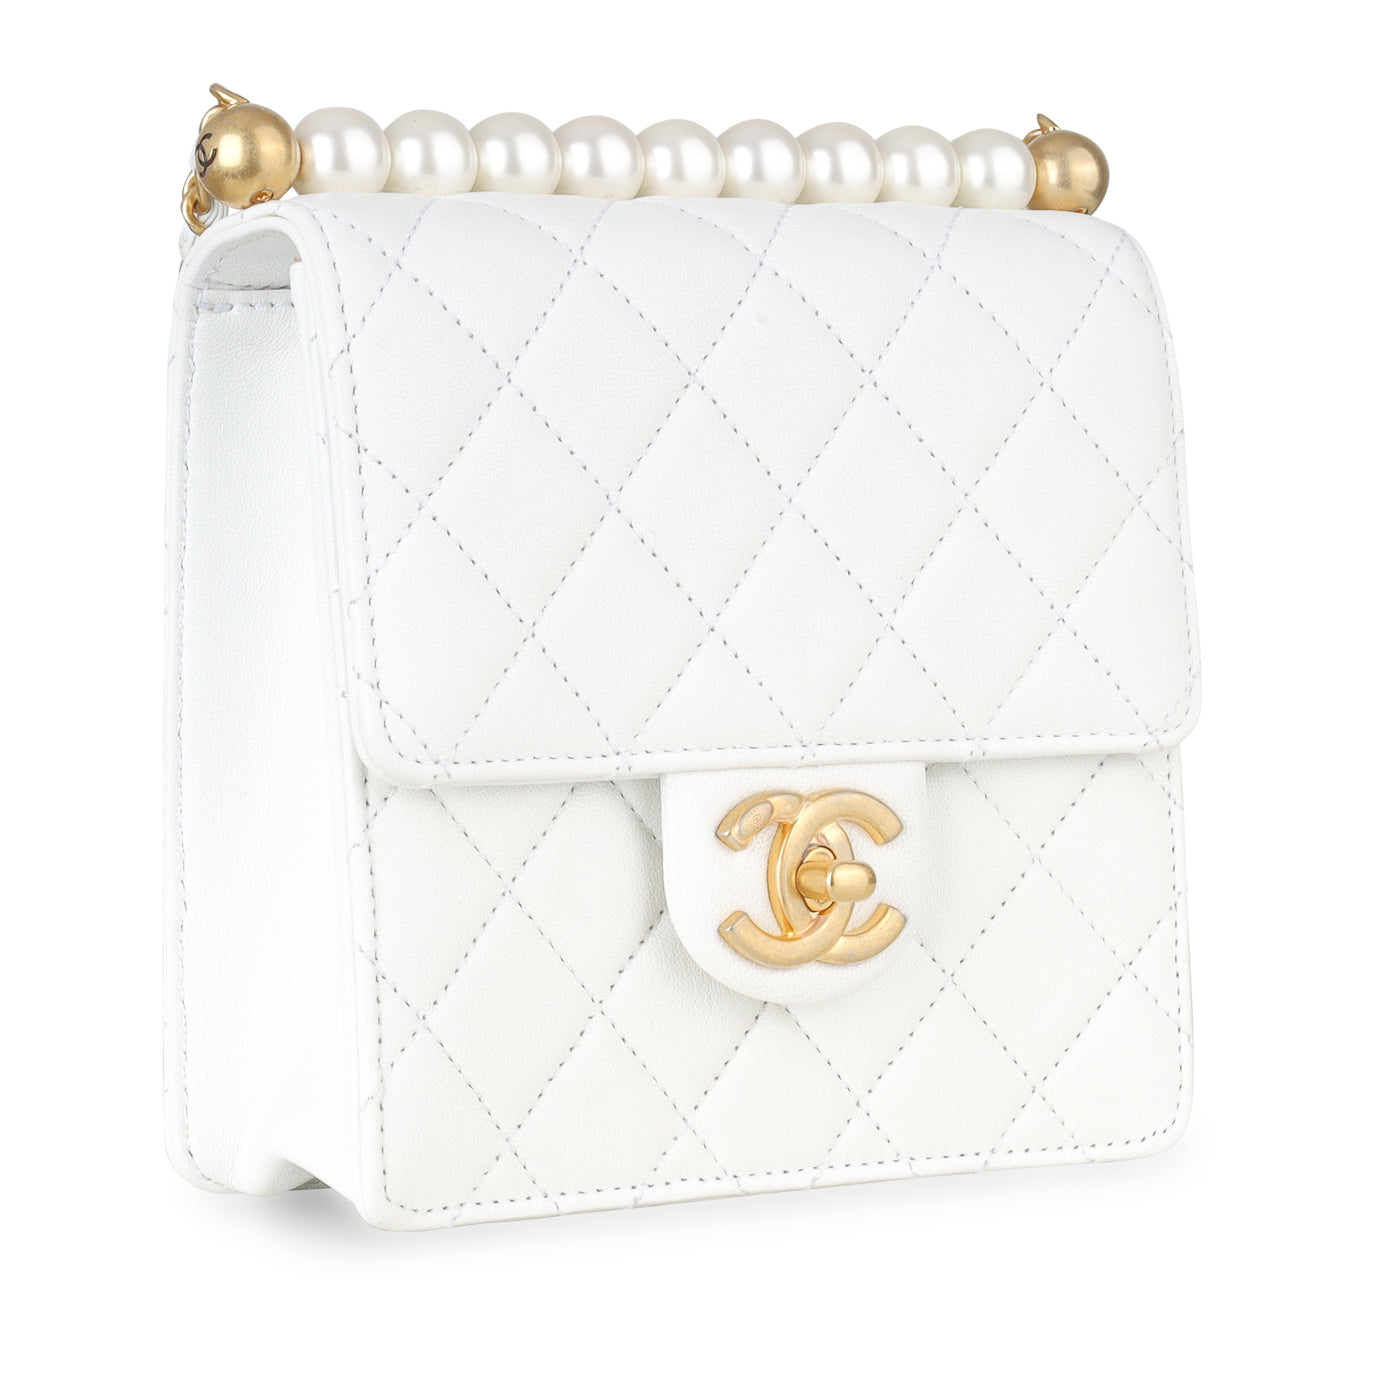 Chanel - Vertical Pearl Flap Bag - White Calfskin - GHW - Pre-Loved